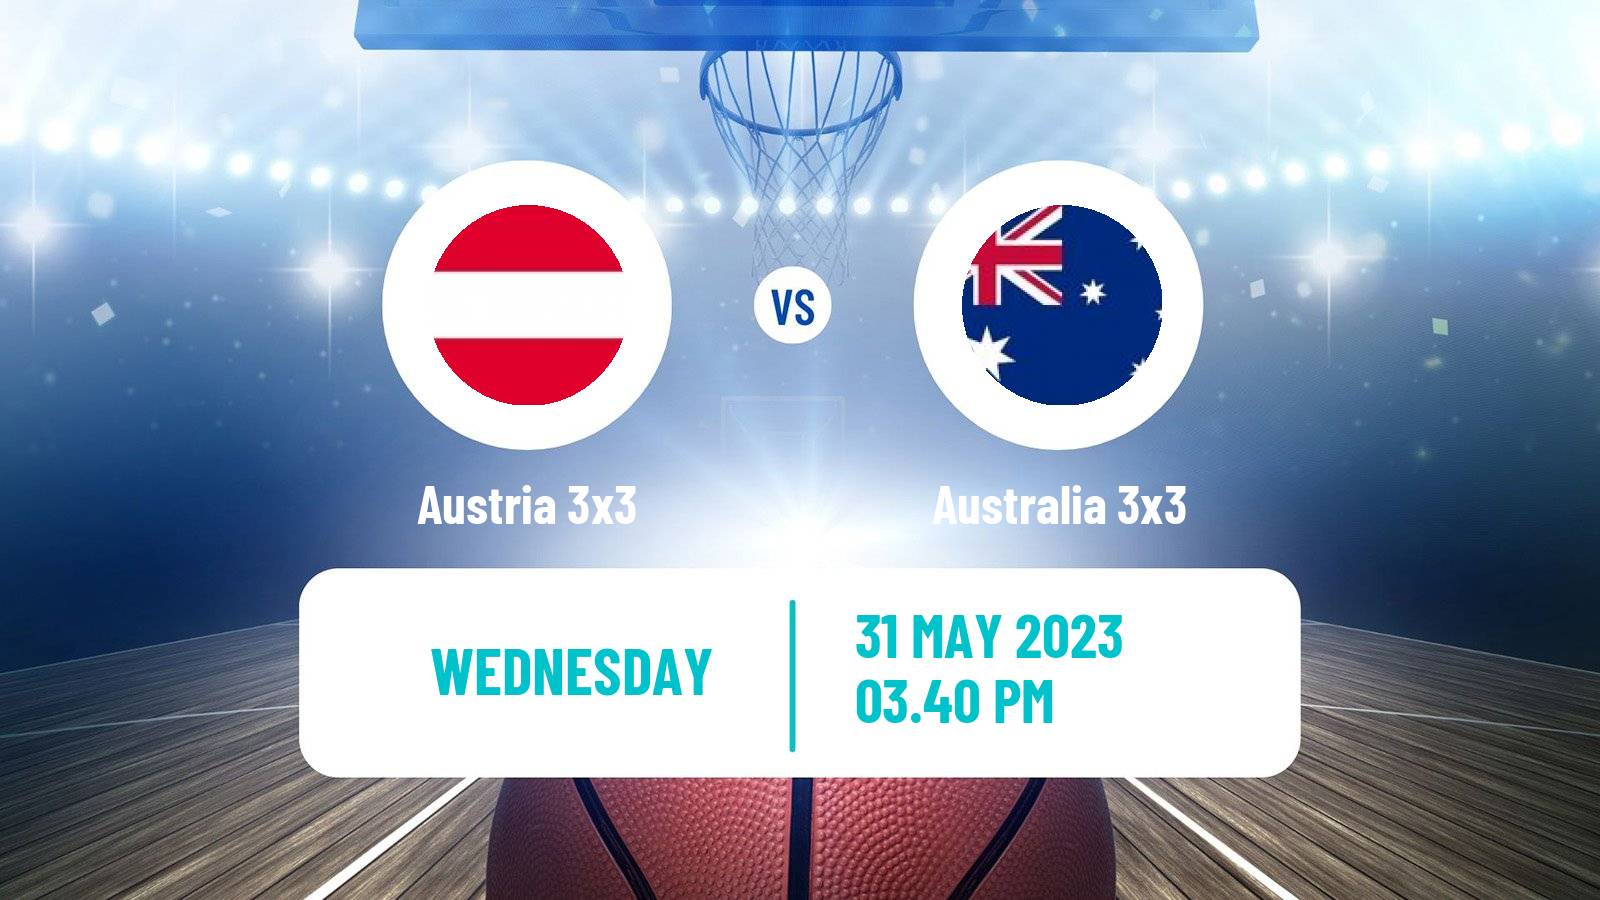 Basketball World Cup Basketball 3x3 Austria 3x3 - Australia 3x3